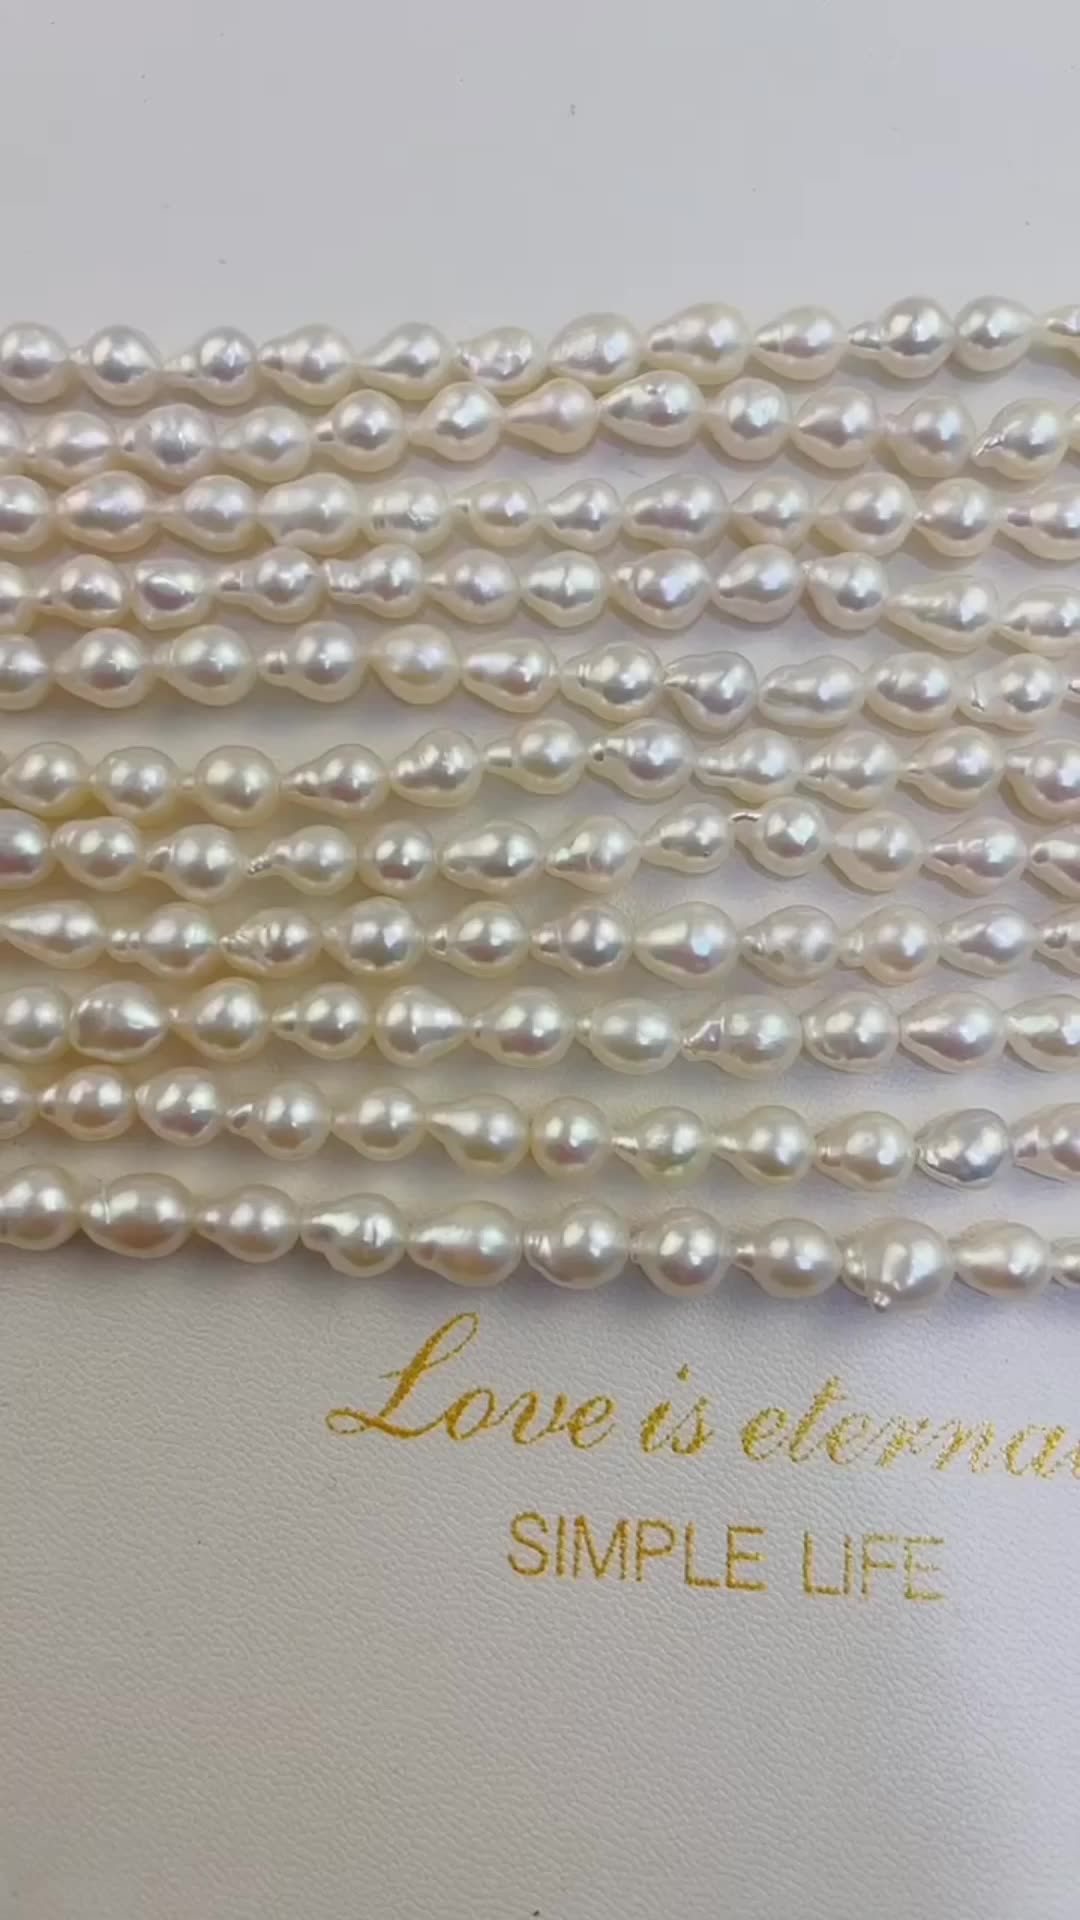 Drop shape white freshwater pearls wholesale